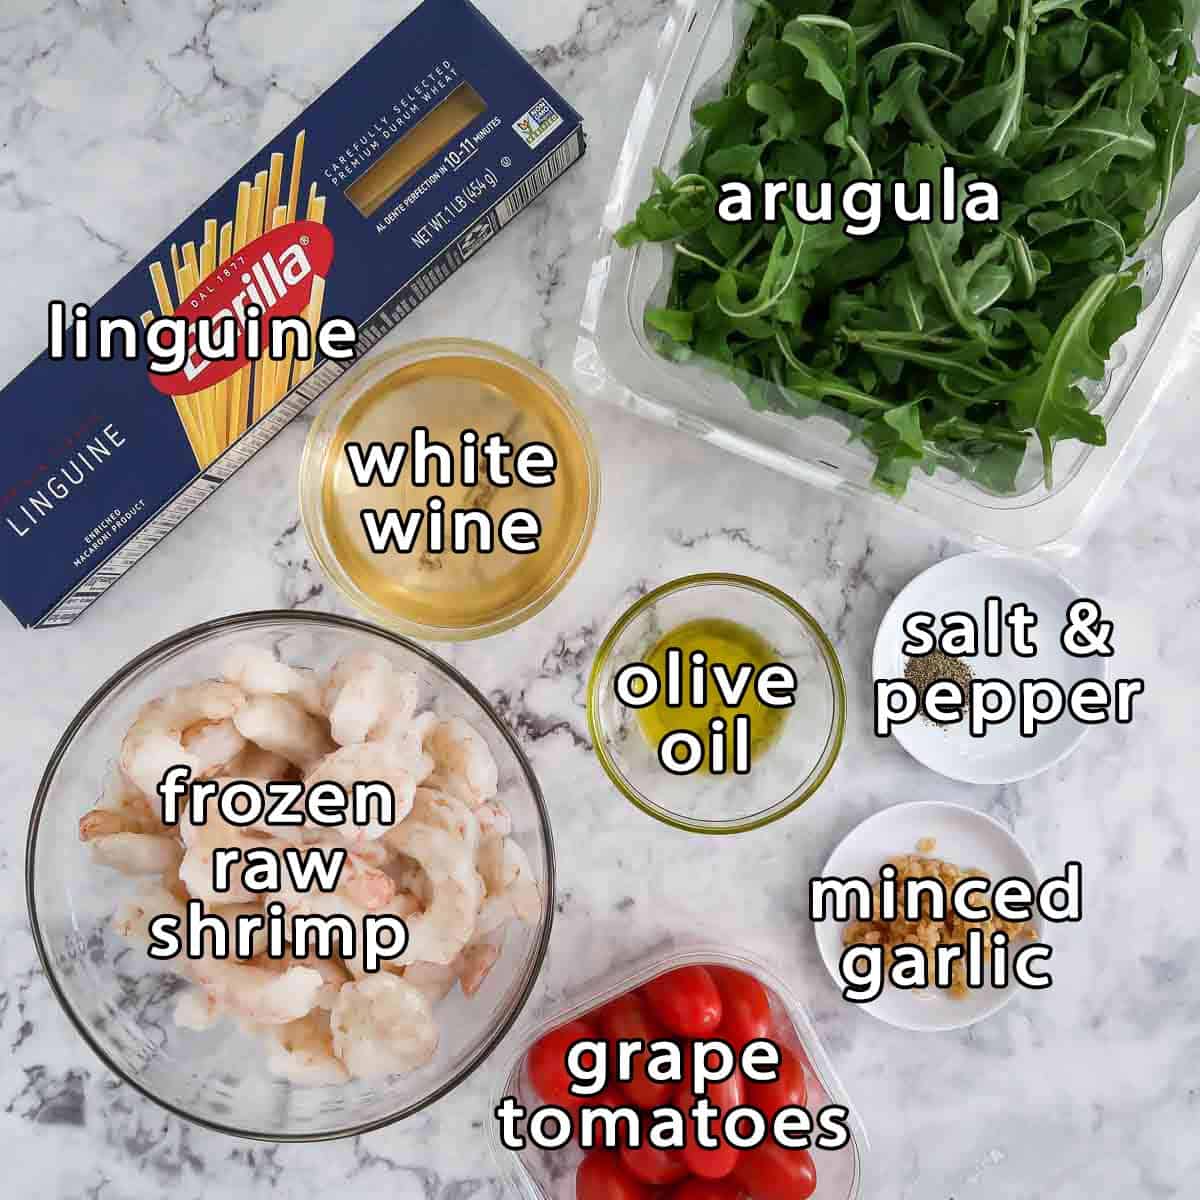 Overhead shot of ingredients - linguine, arugula, white wine, olive oil, frozen raw shrimp, grape tomatoes, minced garlic, salt, and pepper.